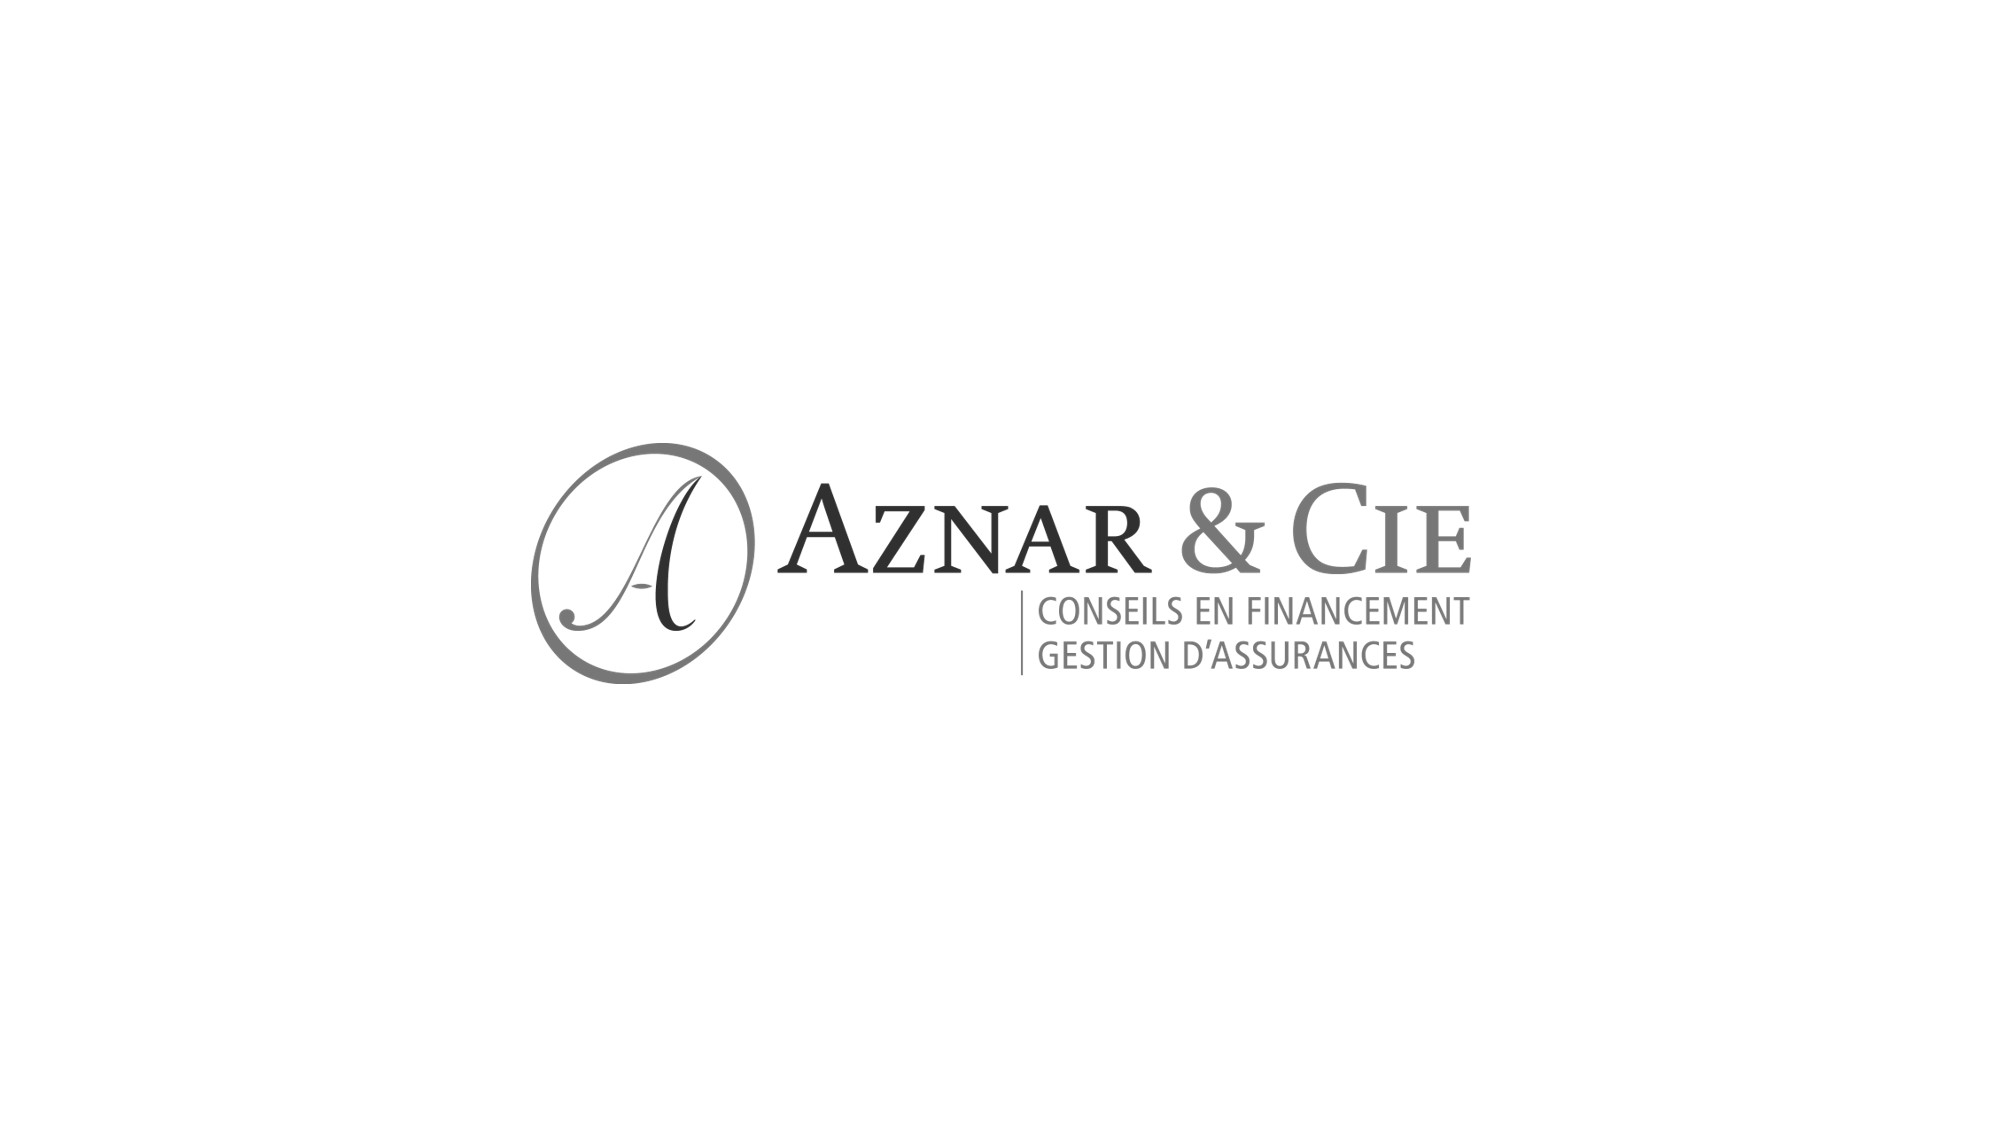 Aznar & Cie